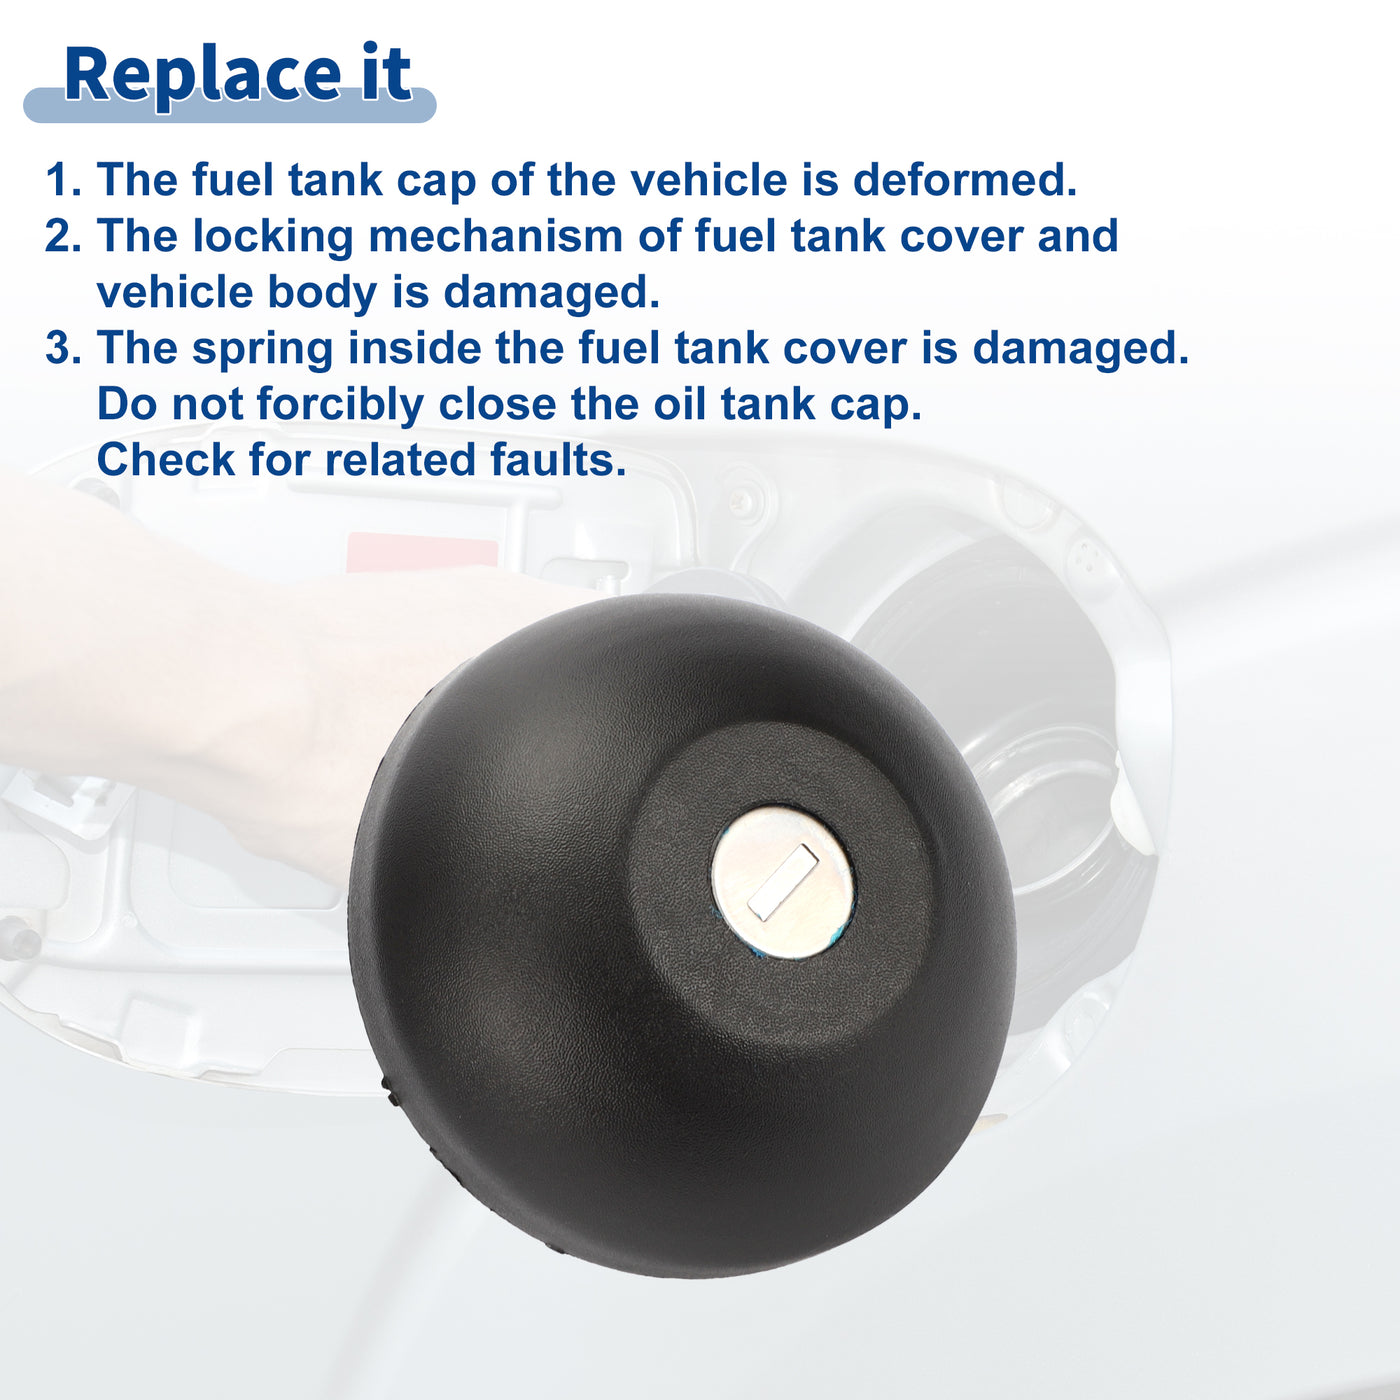 ACROPIX Plastic Locking Gas Cap Lock Fuel Tank Cap Black Fit for Renault Clio II/MK2 1998-2012 with Keys No.7701471585/7701470950 - Pack of 3